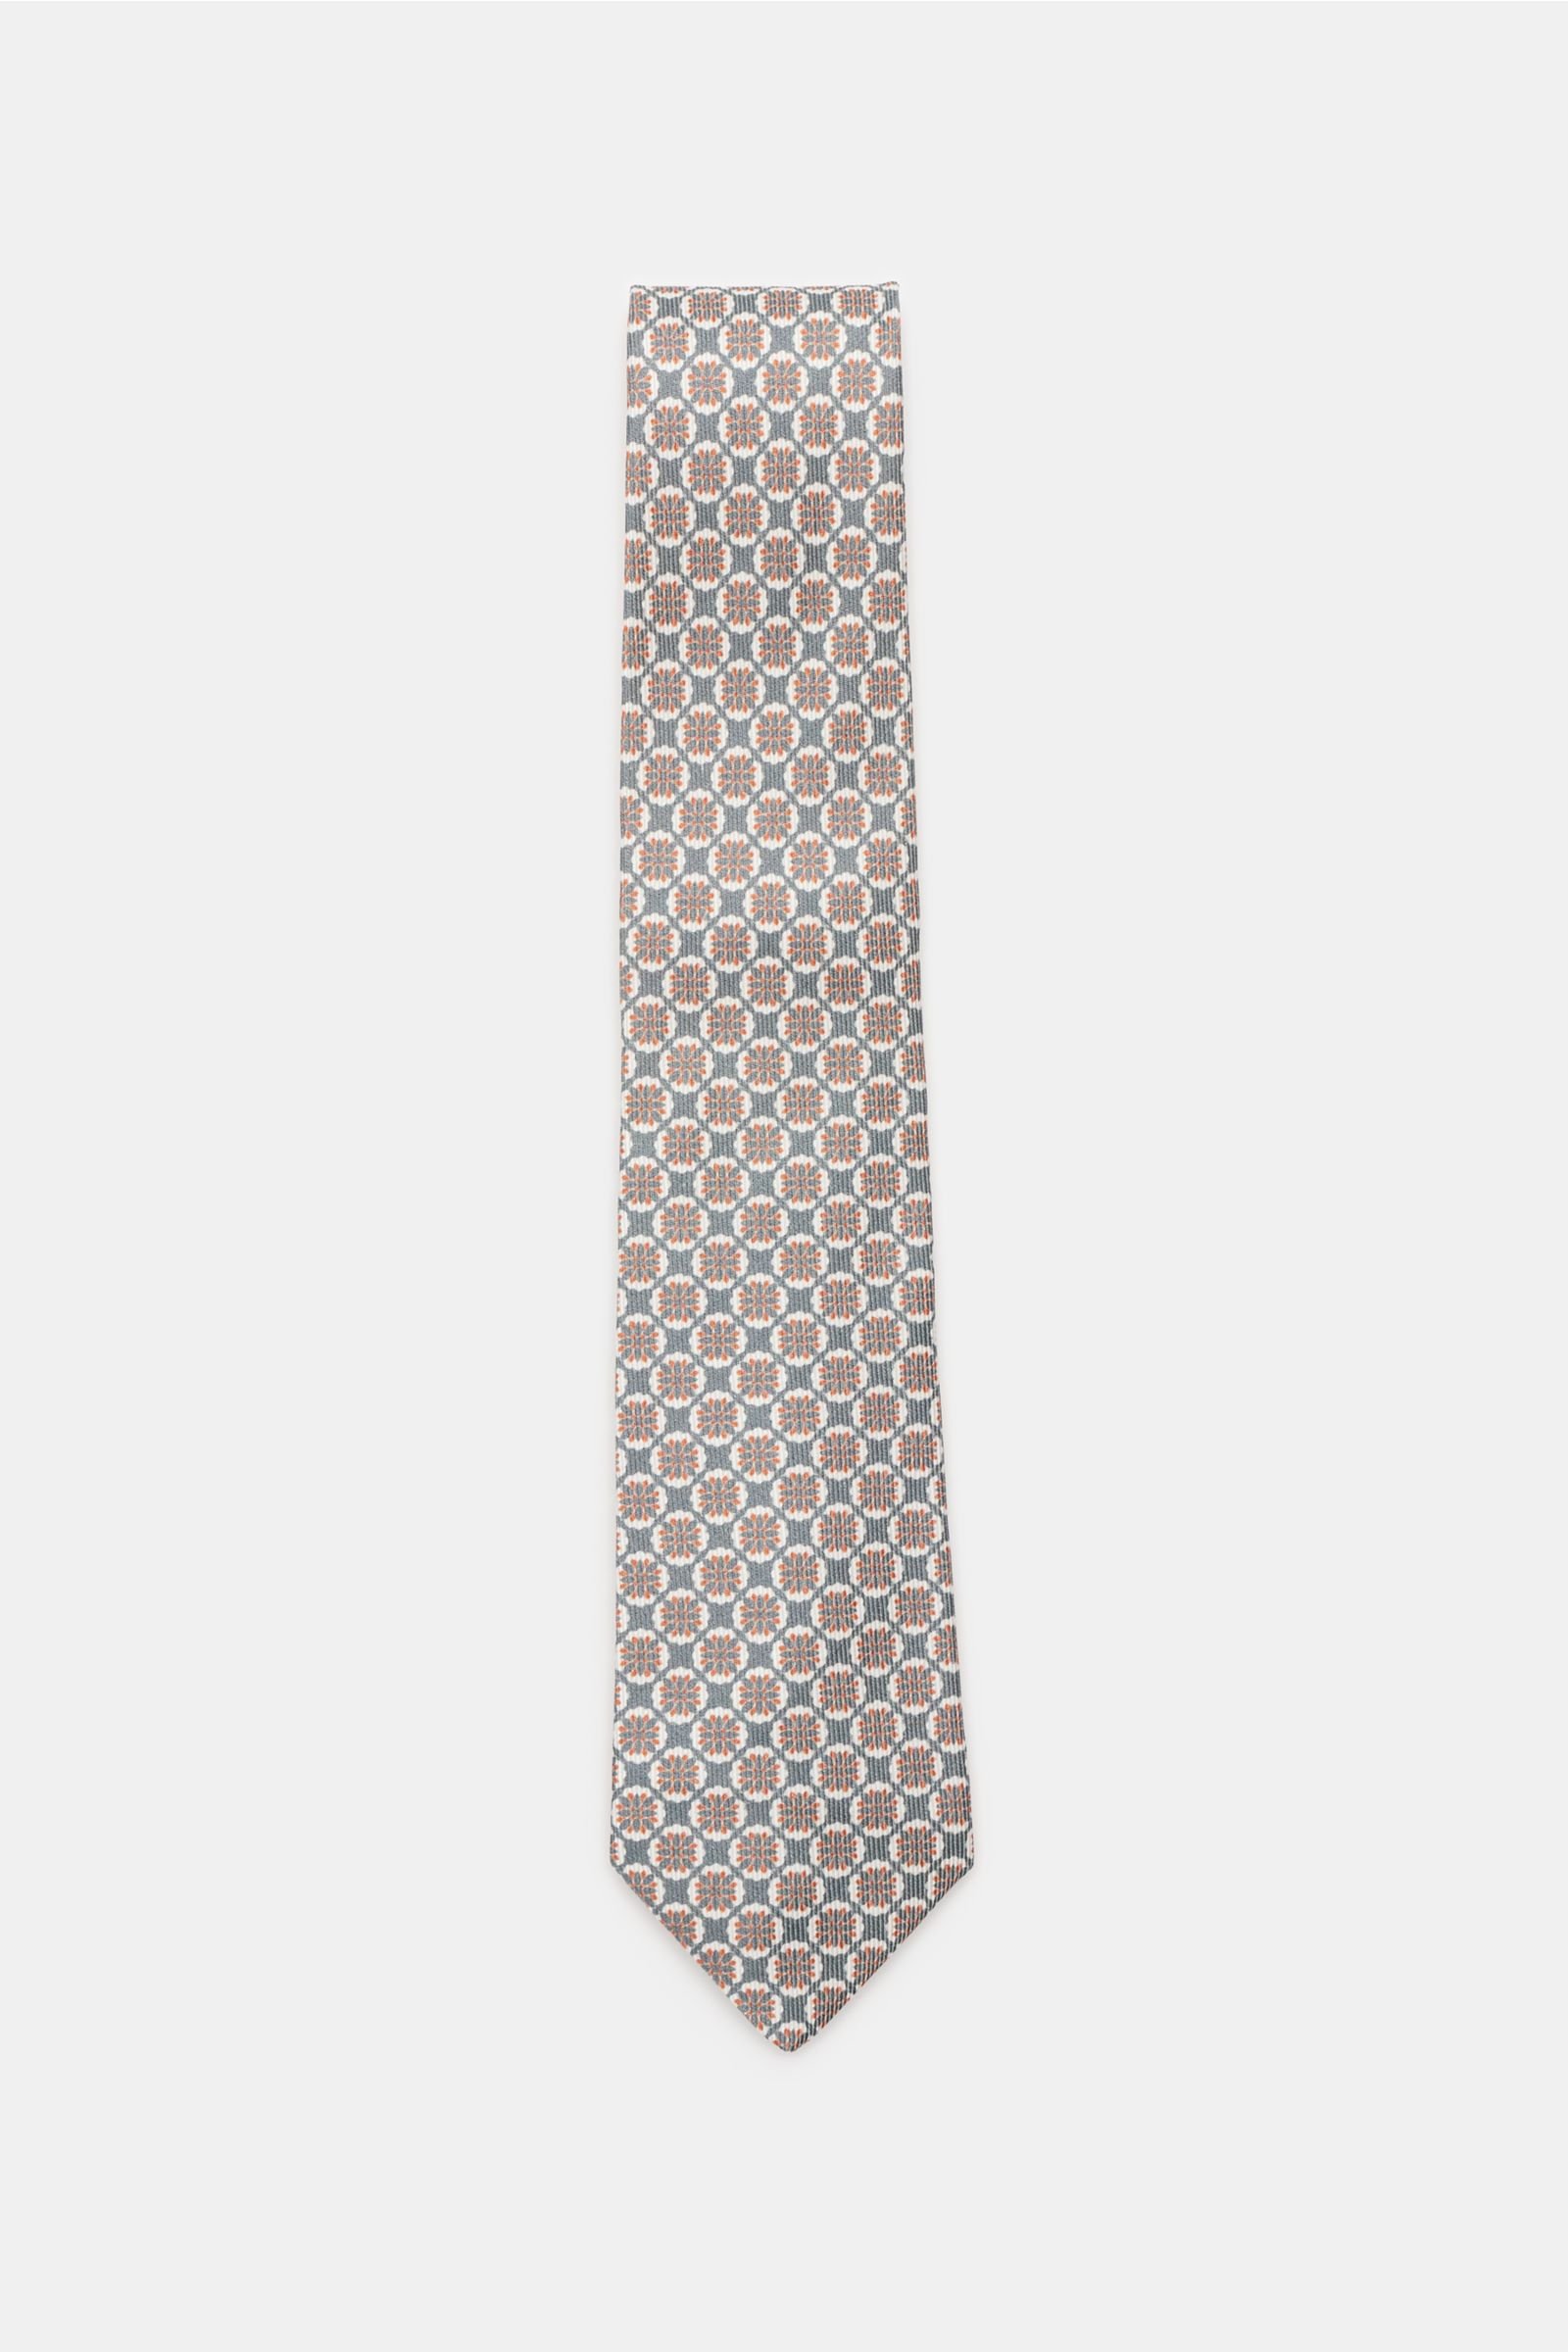 Tie grey-green/orange patterned